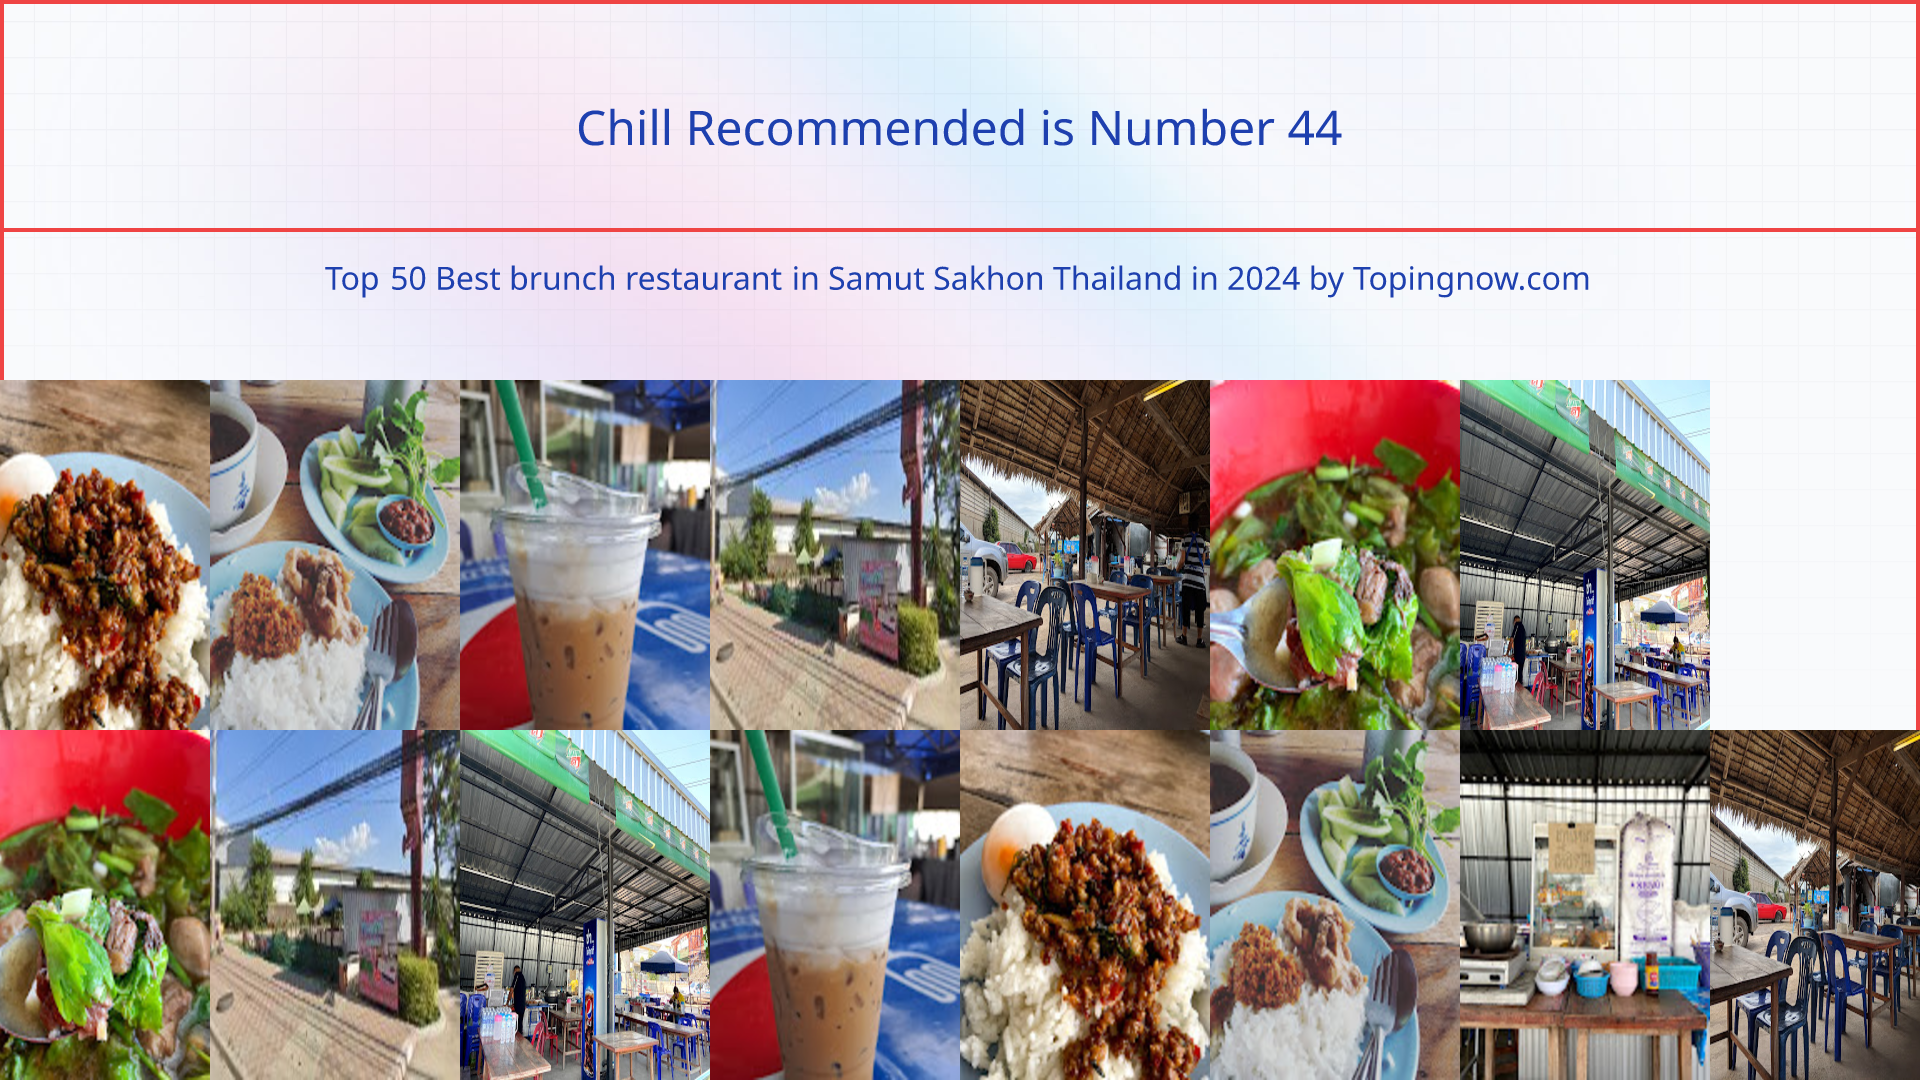 Chill Recommended: Top 50 Best brunch restaurant in Samut Sakhon Thailand in 2024